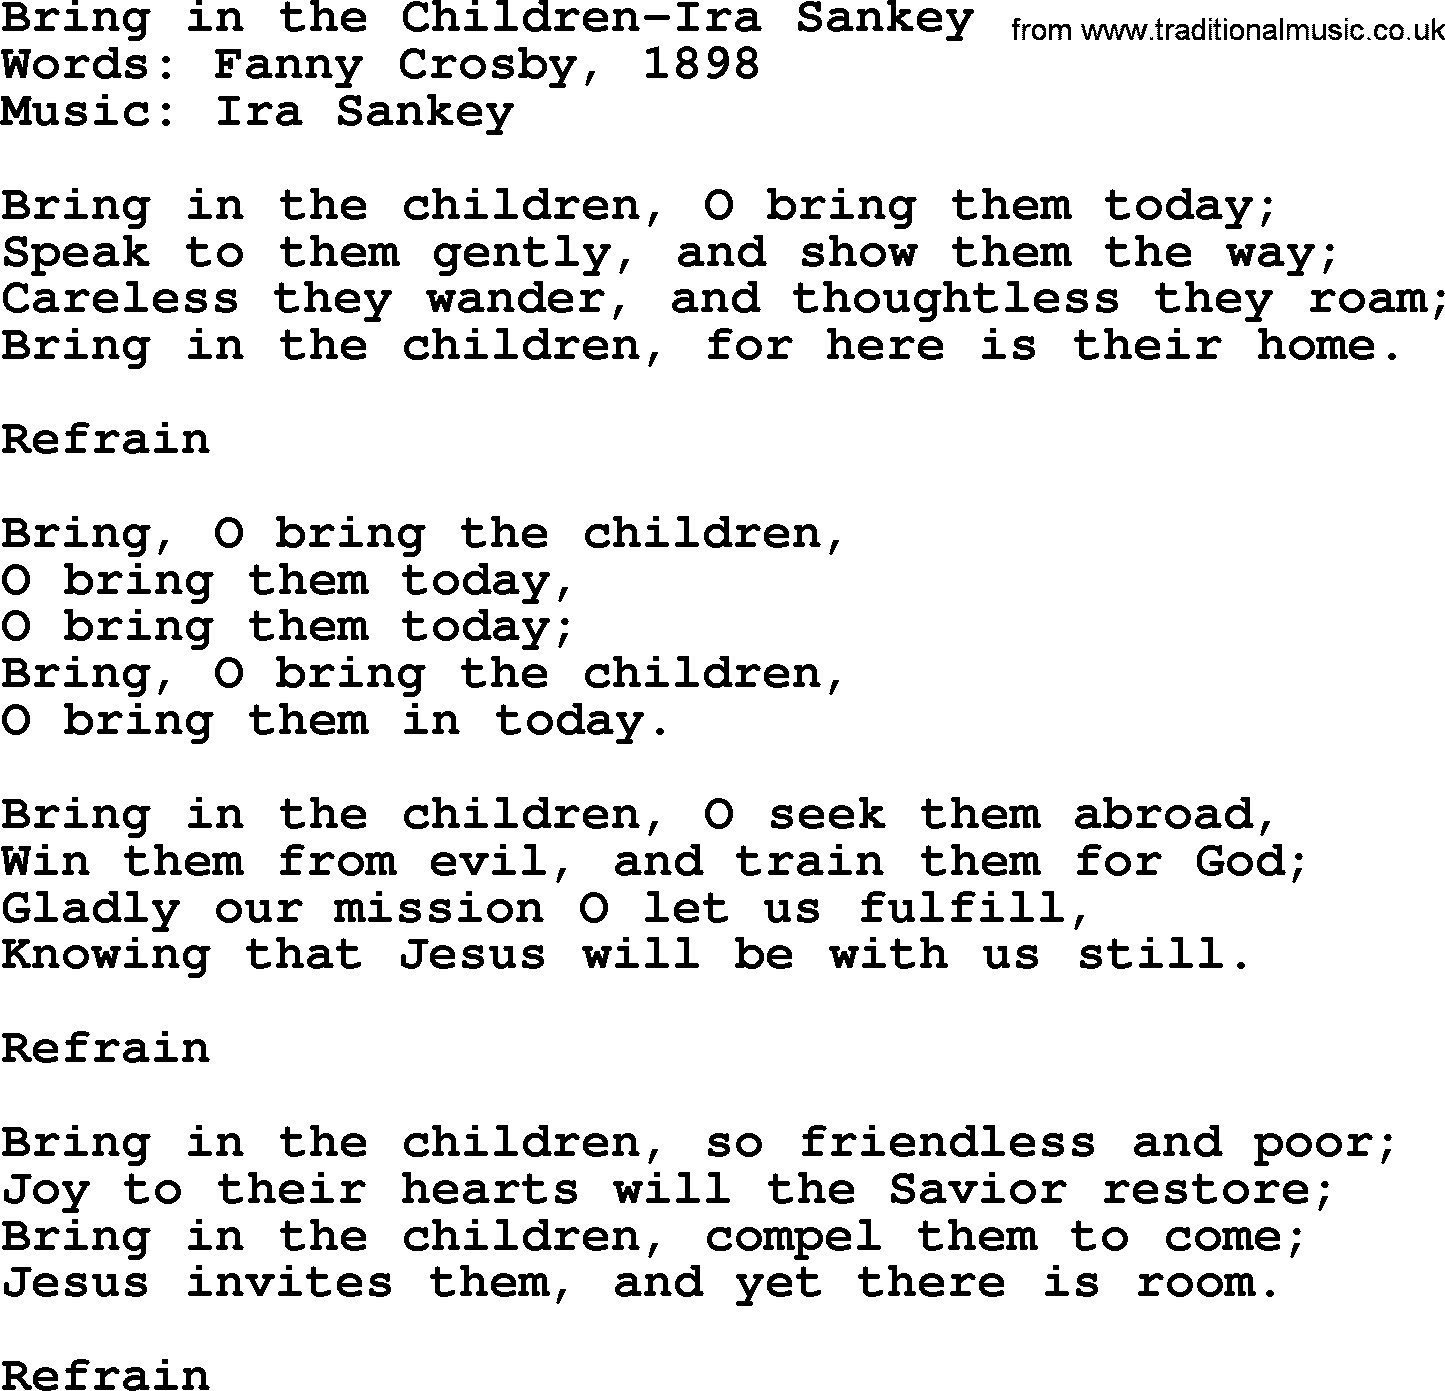 Ira Sankey hymn: Bring in the Children-Ira Sankey, lyrics